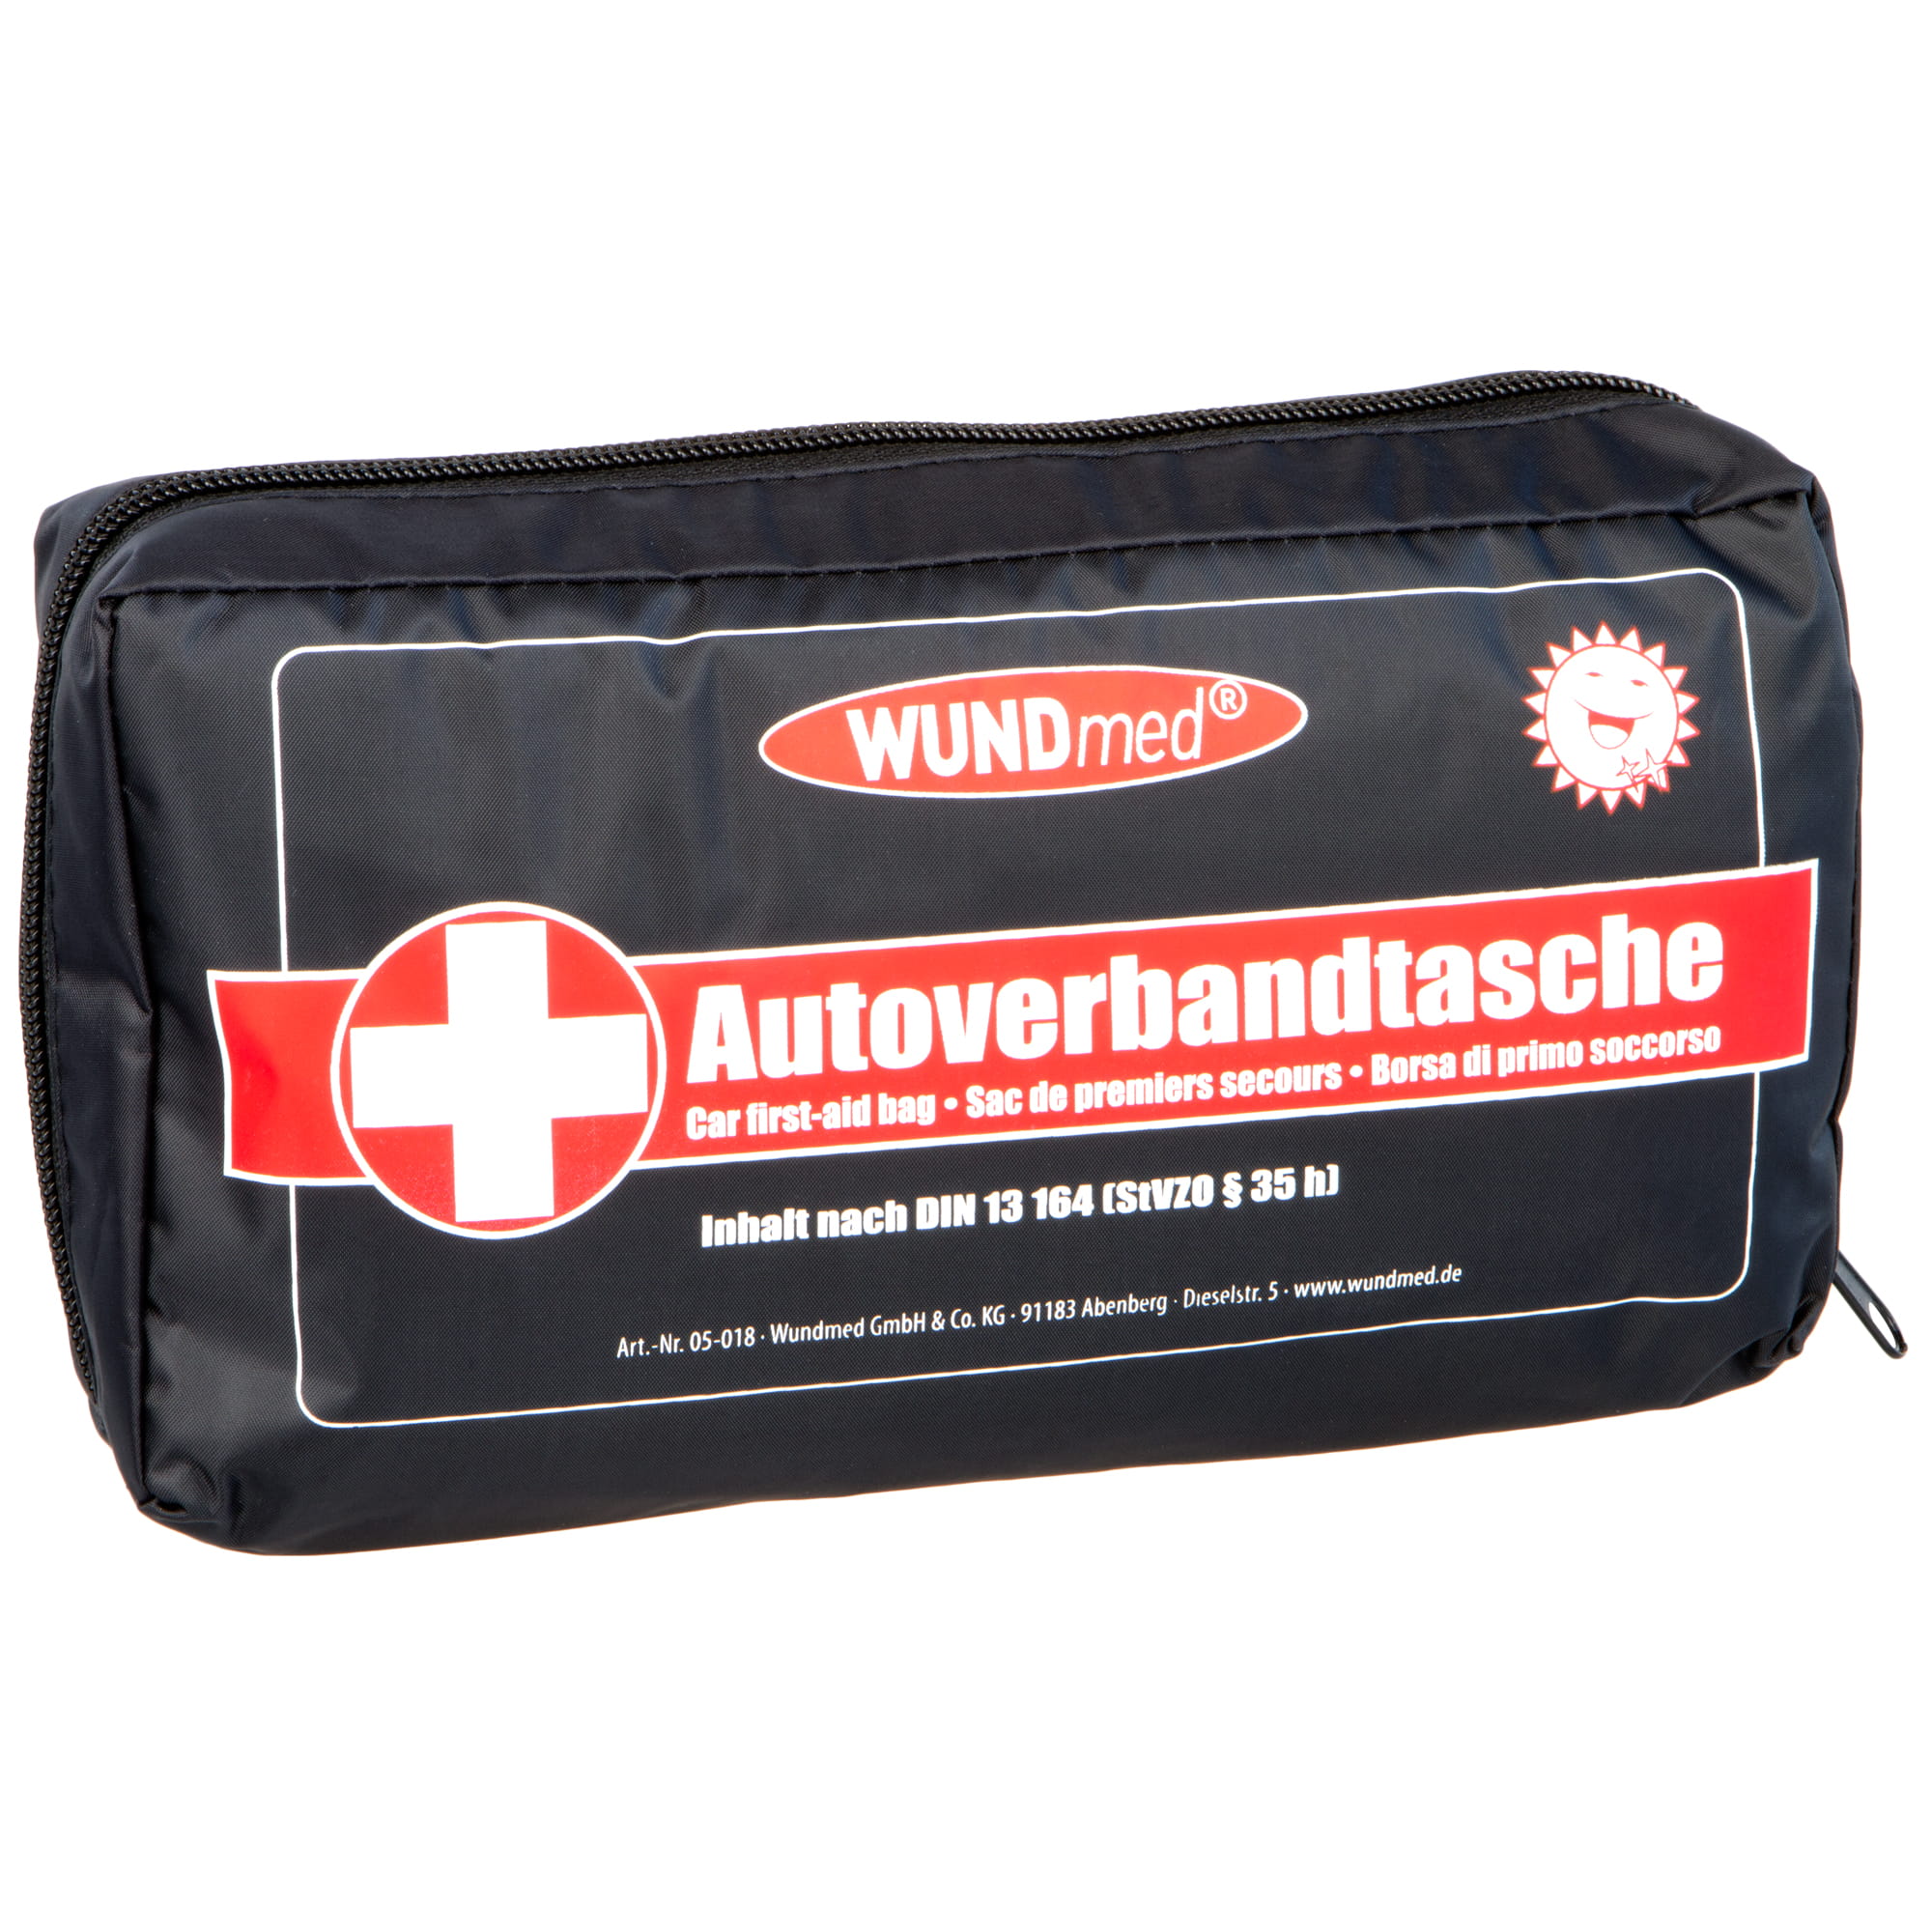 WUNDmed® Autoverbandtasche DIN 13164 (StVZO § 35 h)